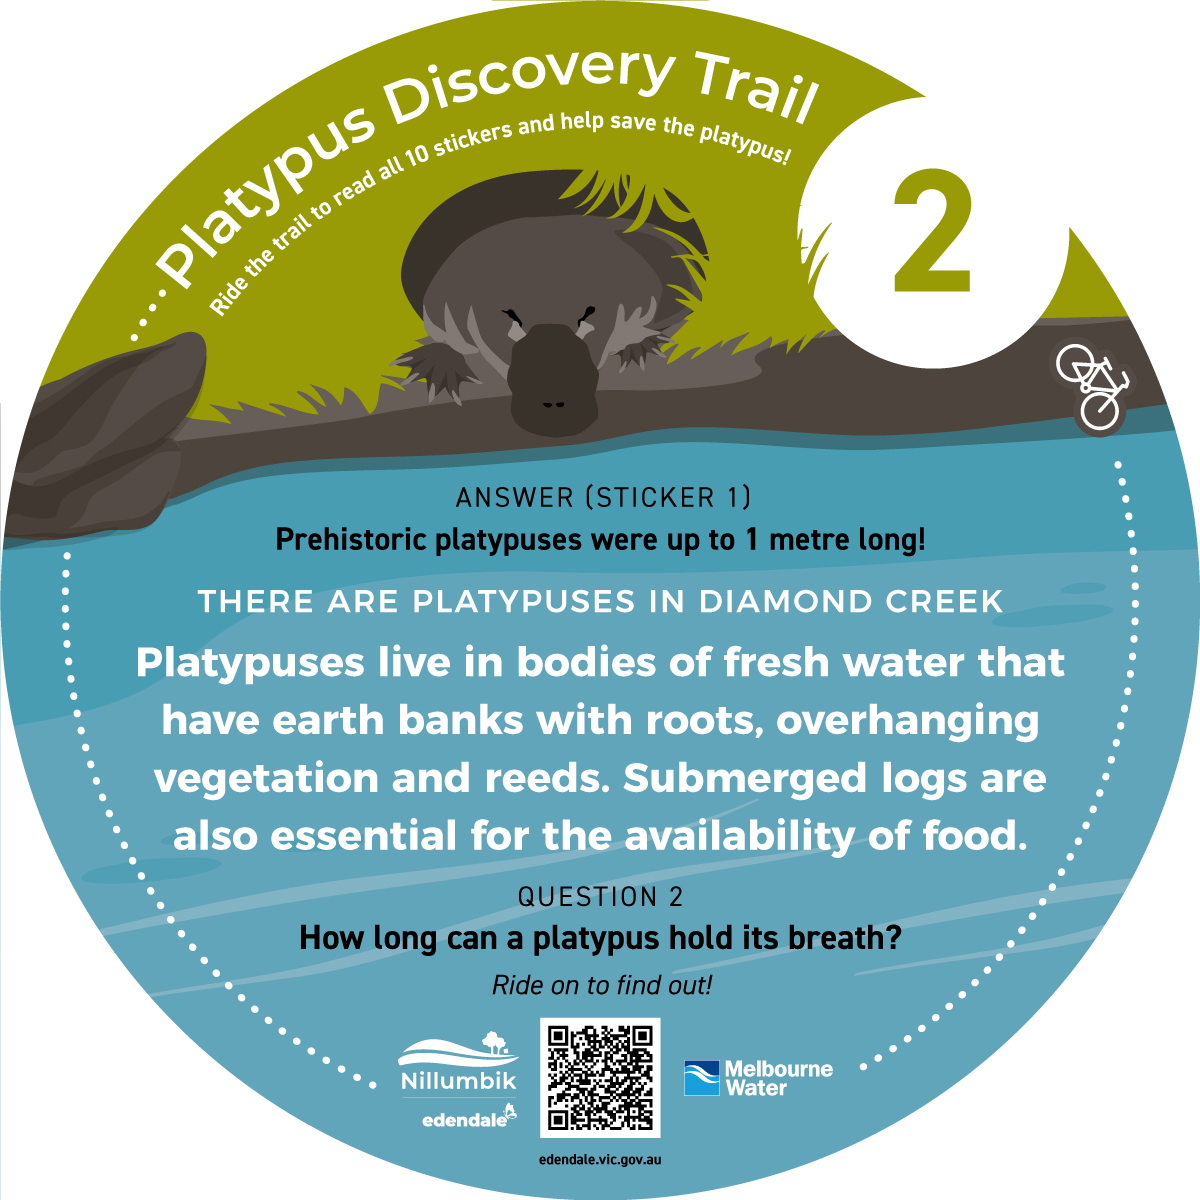 Diamond-Creek-Platypus-Discovery-Trail-2.jpg